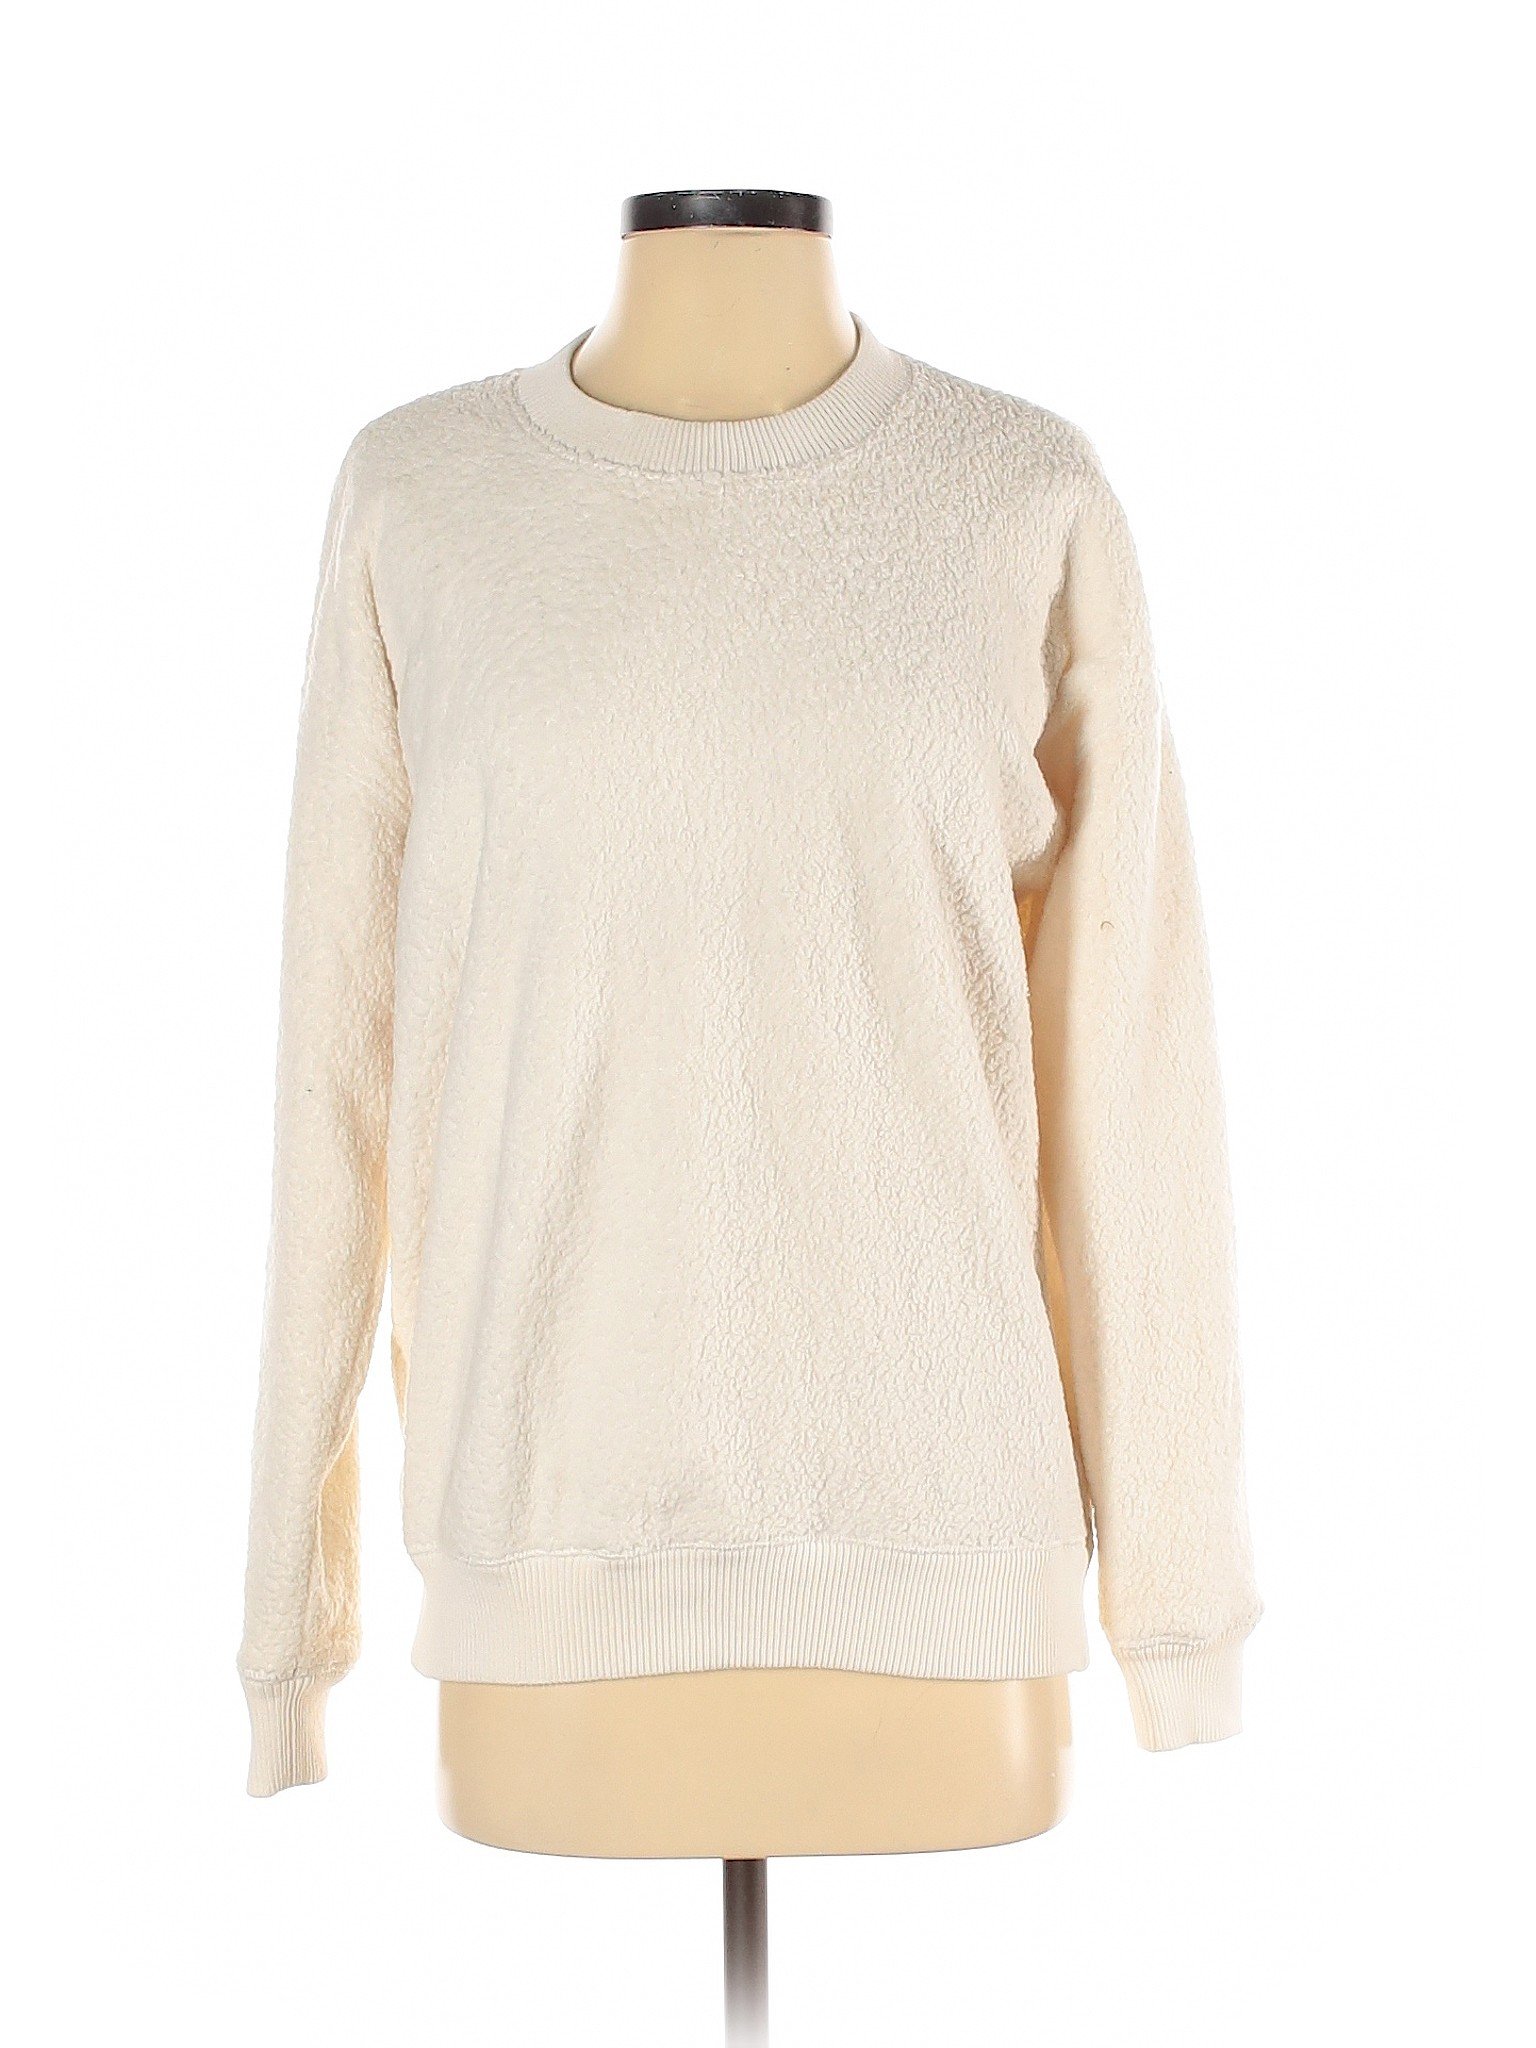 Aerie Women Ivory Pullover Sweater XS | eBay